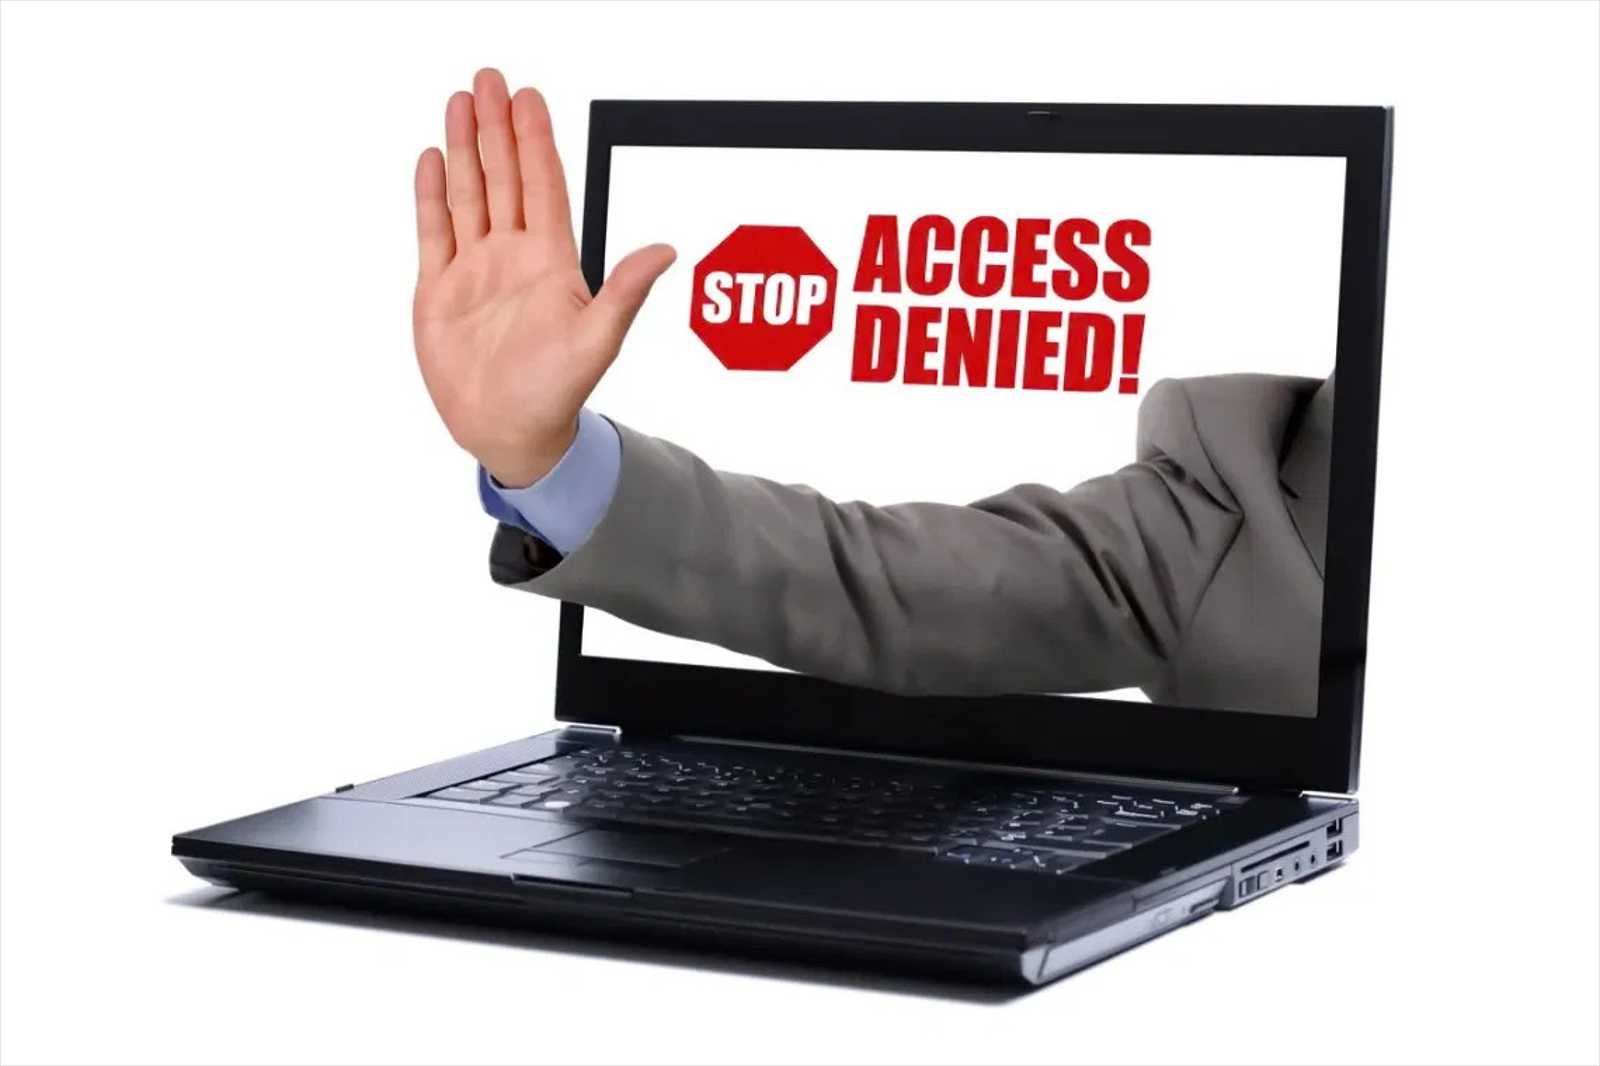 Suportul extern de memorie "is not accessible. Access is denied."